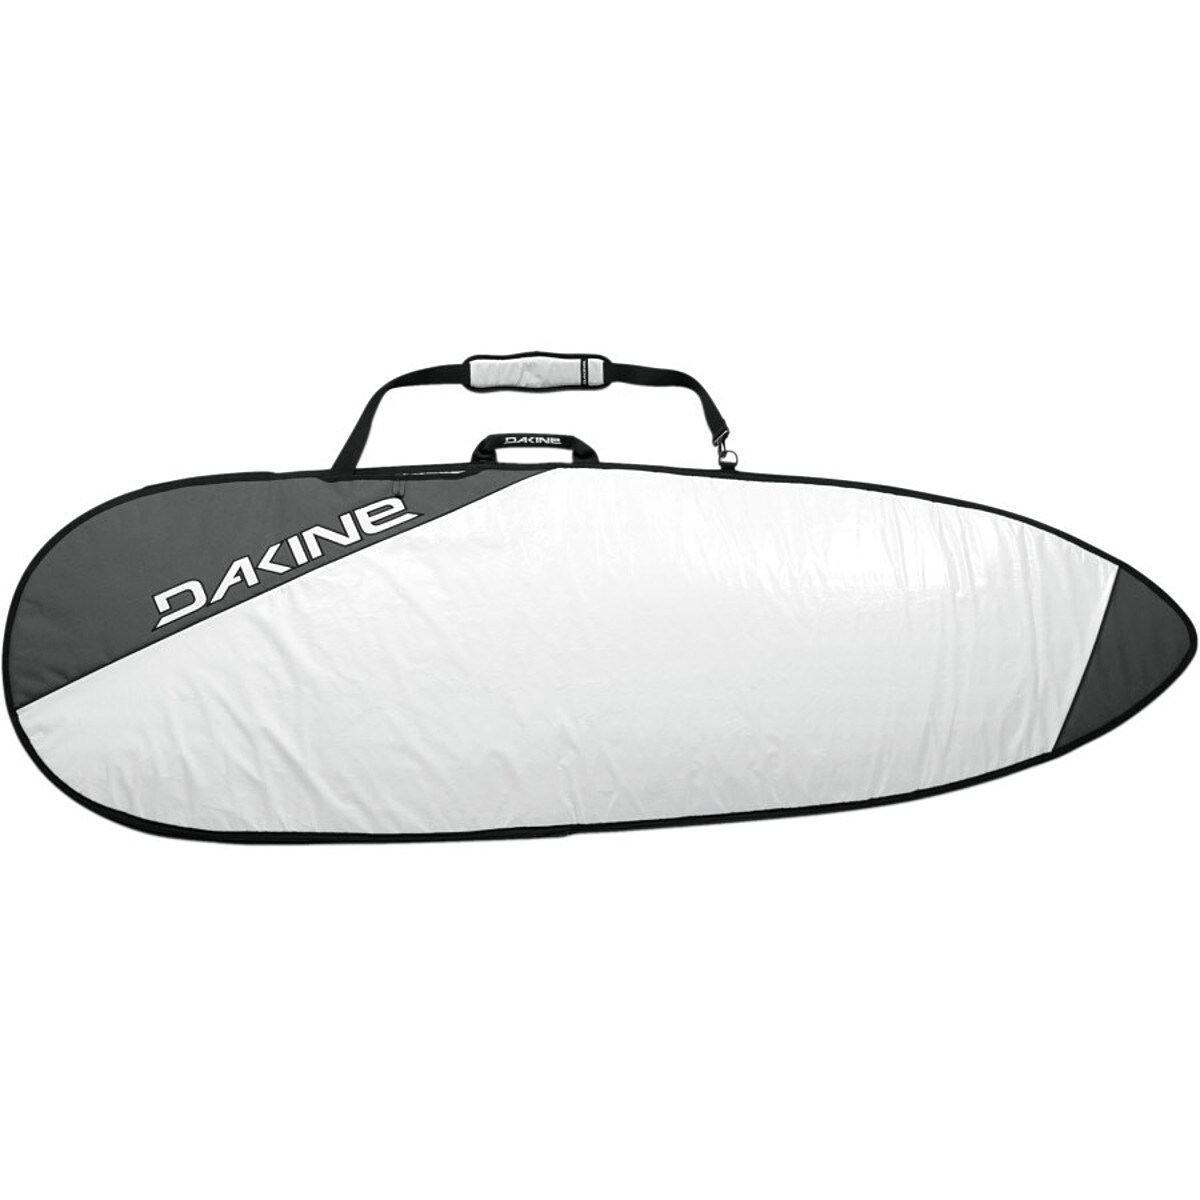 DAKINE Daylight Thruster Surfboard Bag